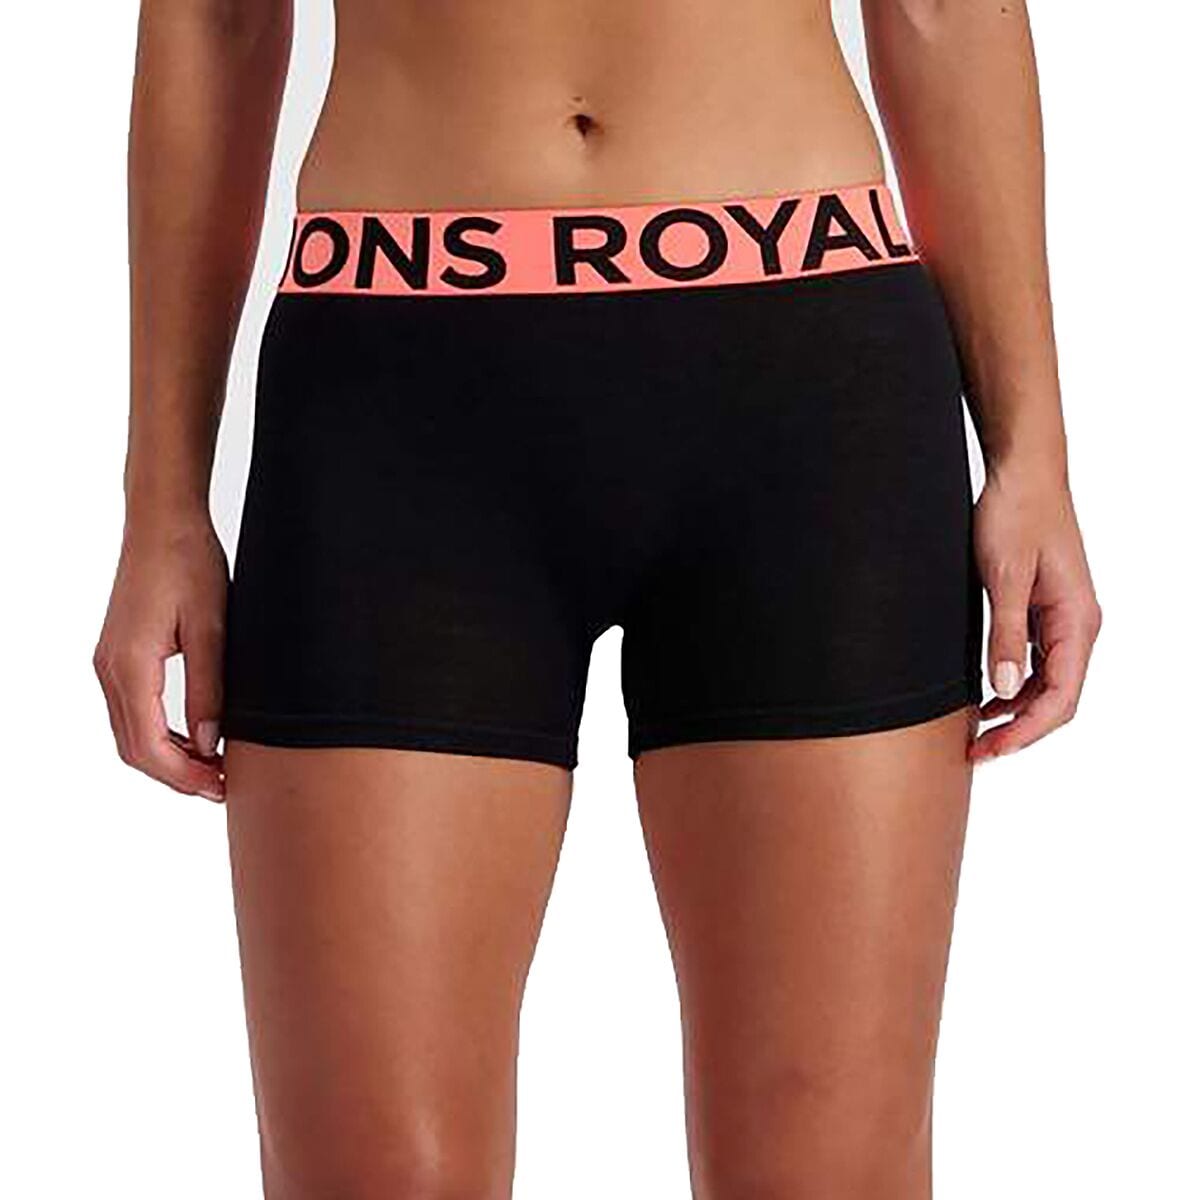 Mons Royale Hannah Hot Pant Underwear - Women's